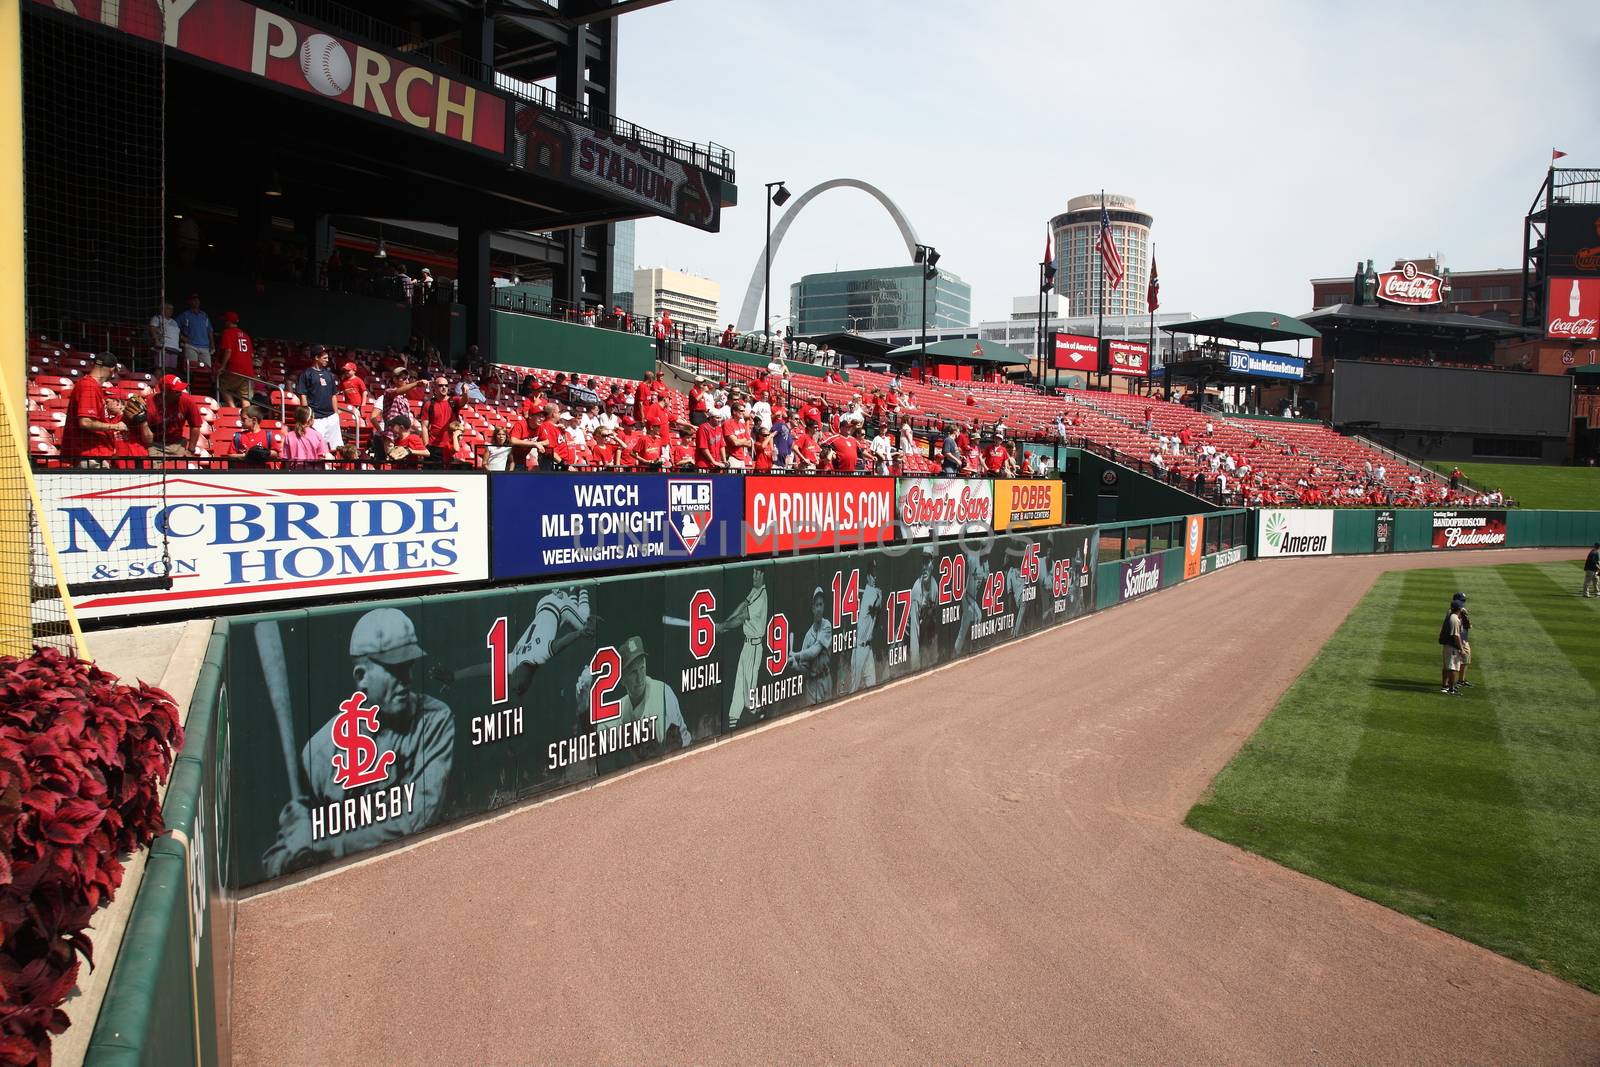 Fans watch for a batting practice home run ball at a late season St. Louis Cardinals baseball game at Busch Stadium.